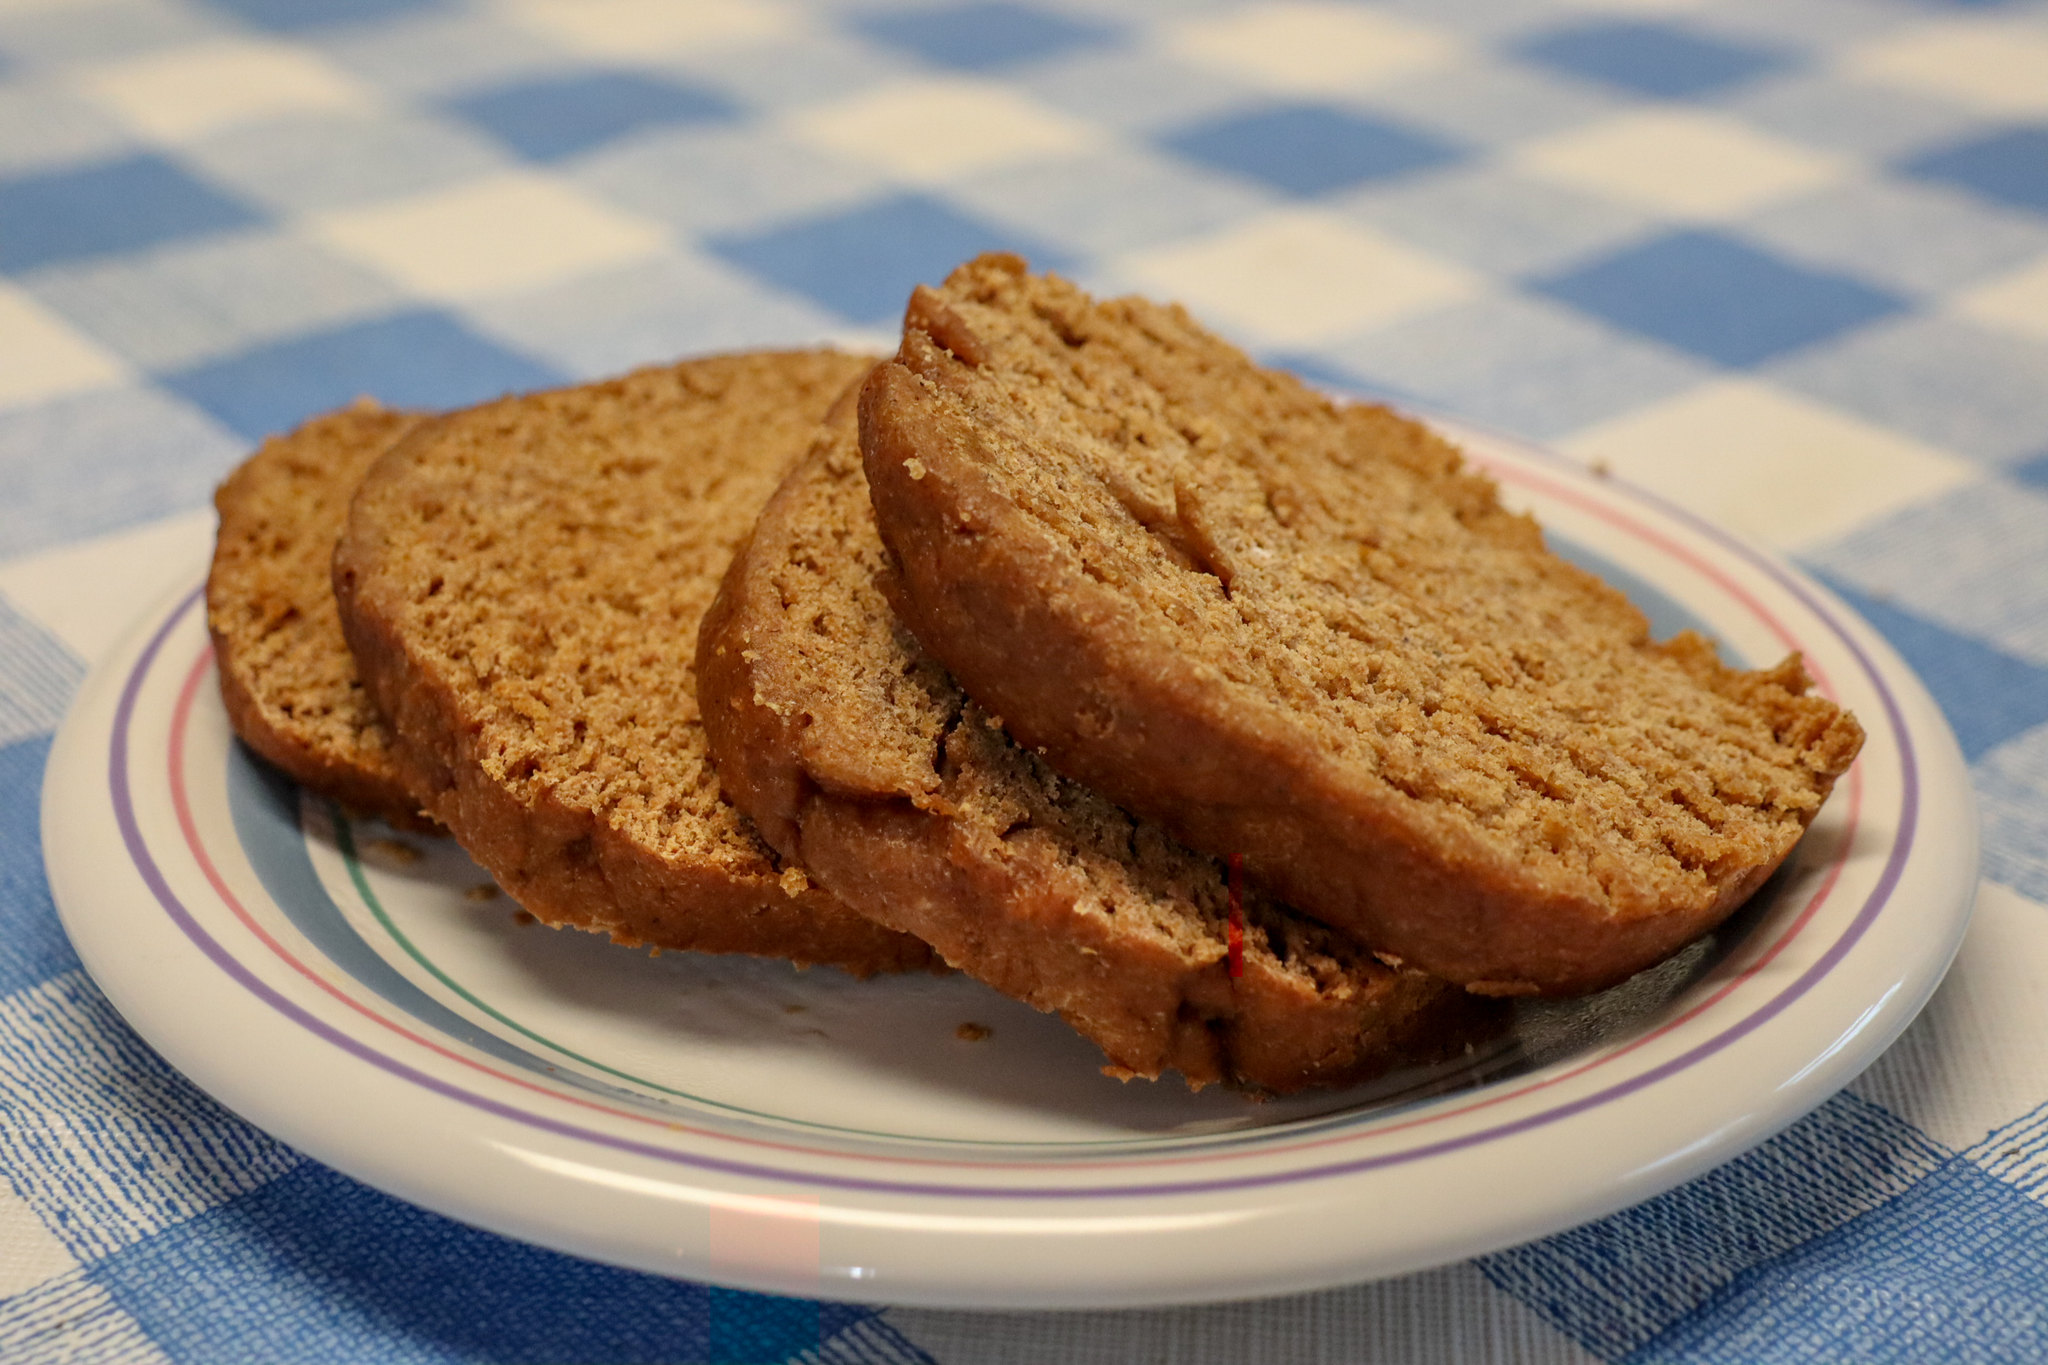 Icealandic Thunder Bread Recipe – A Sweet Rye Bread Tradition